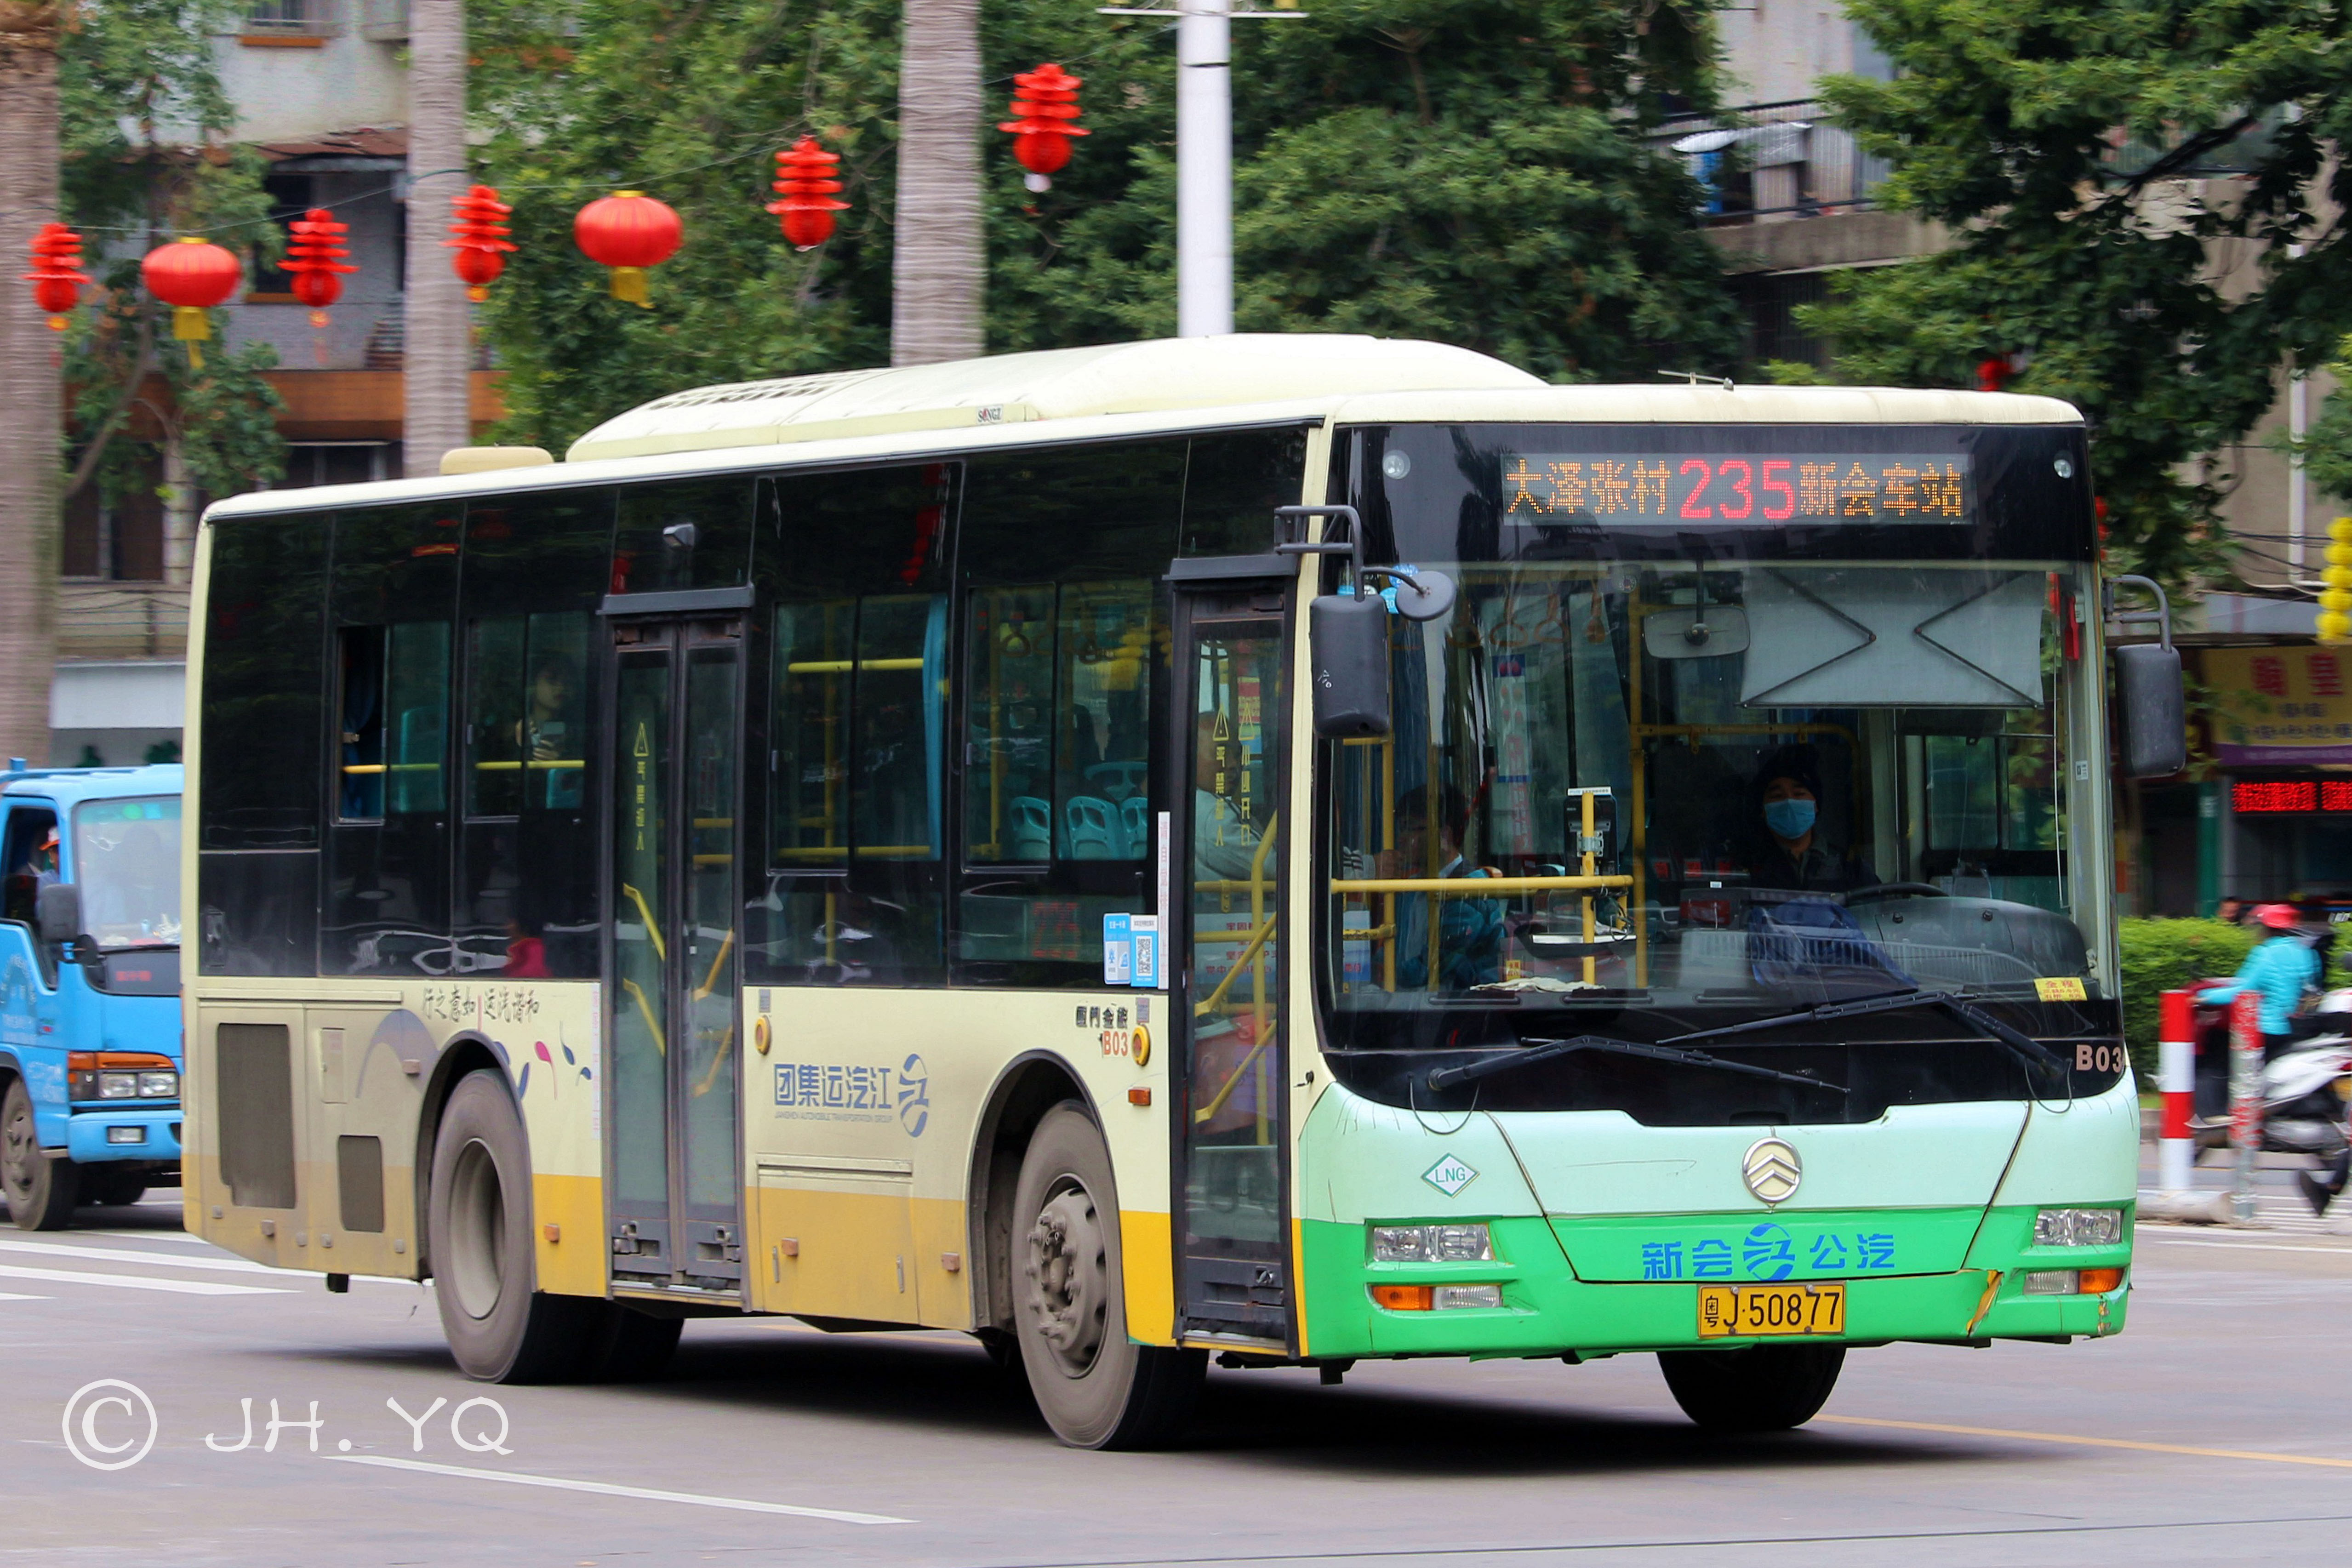 Bus rapid transit brt system -Fotos und -Bildmaterial in hoher ...